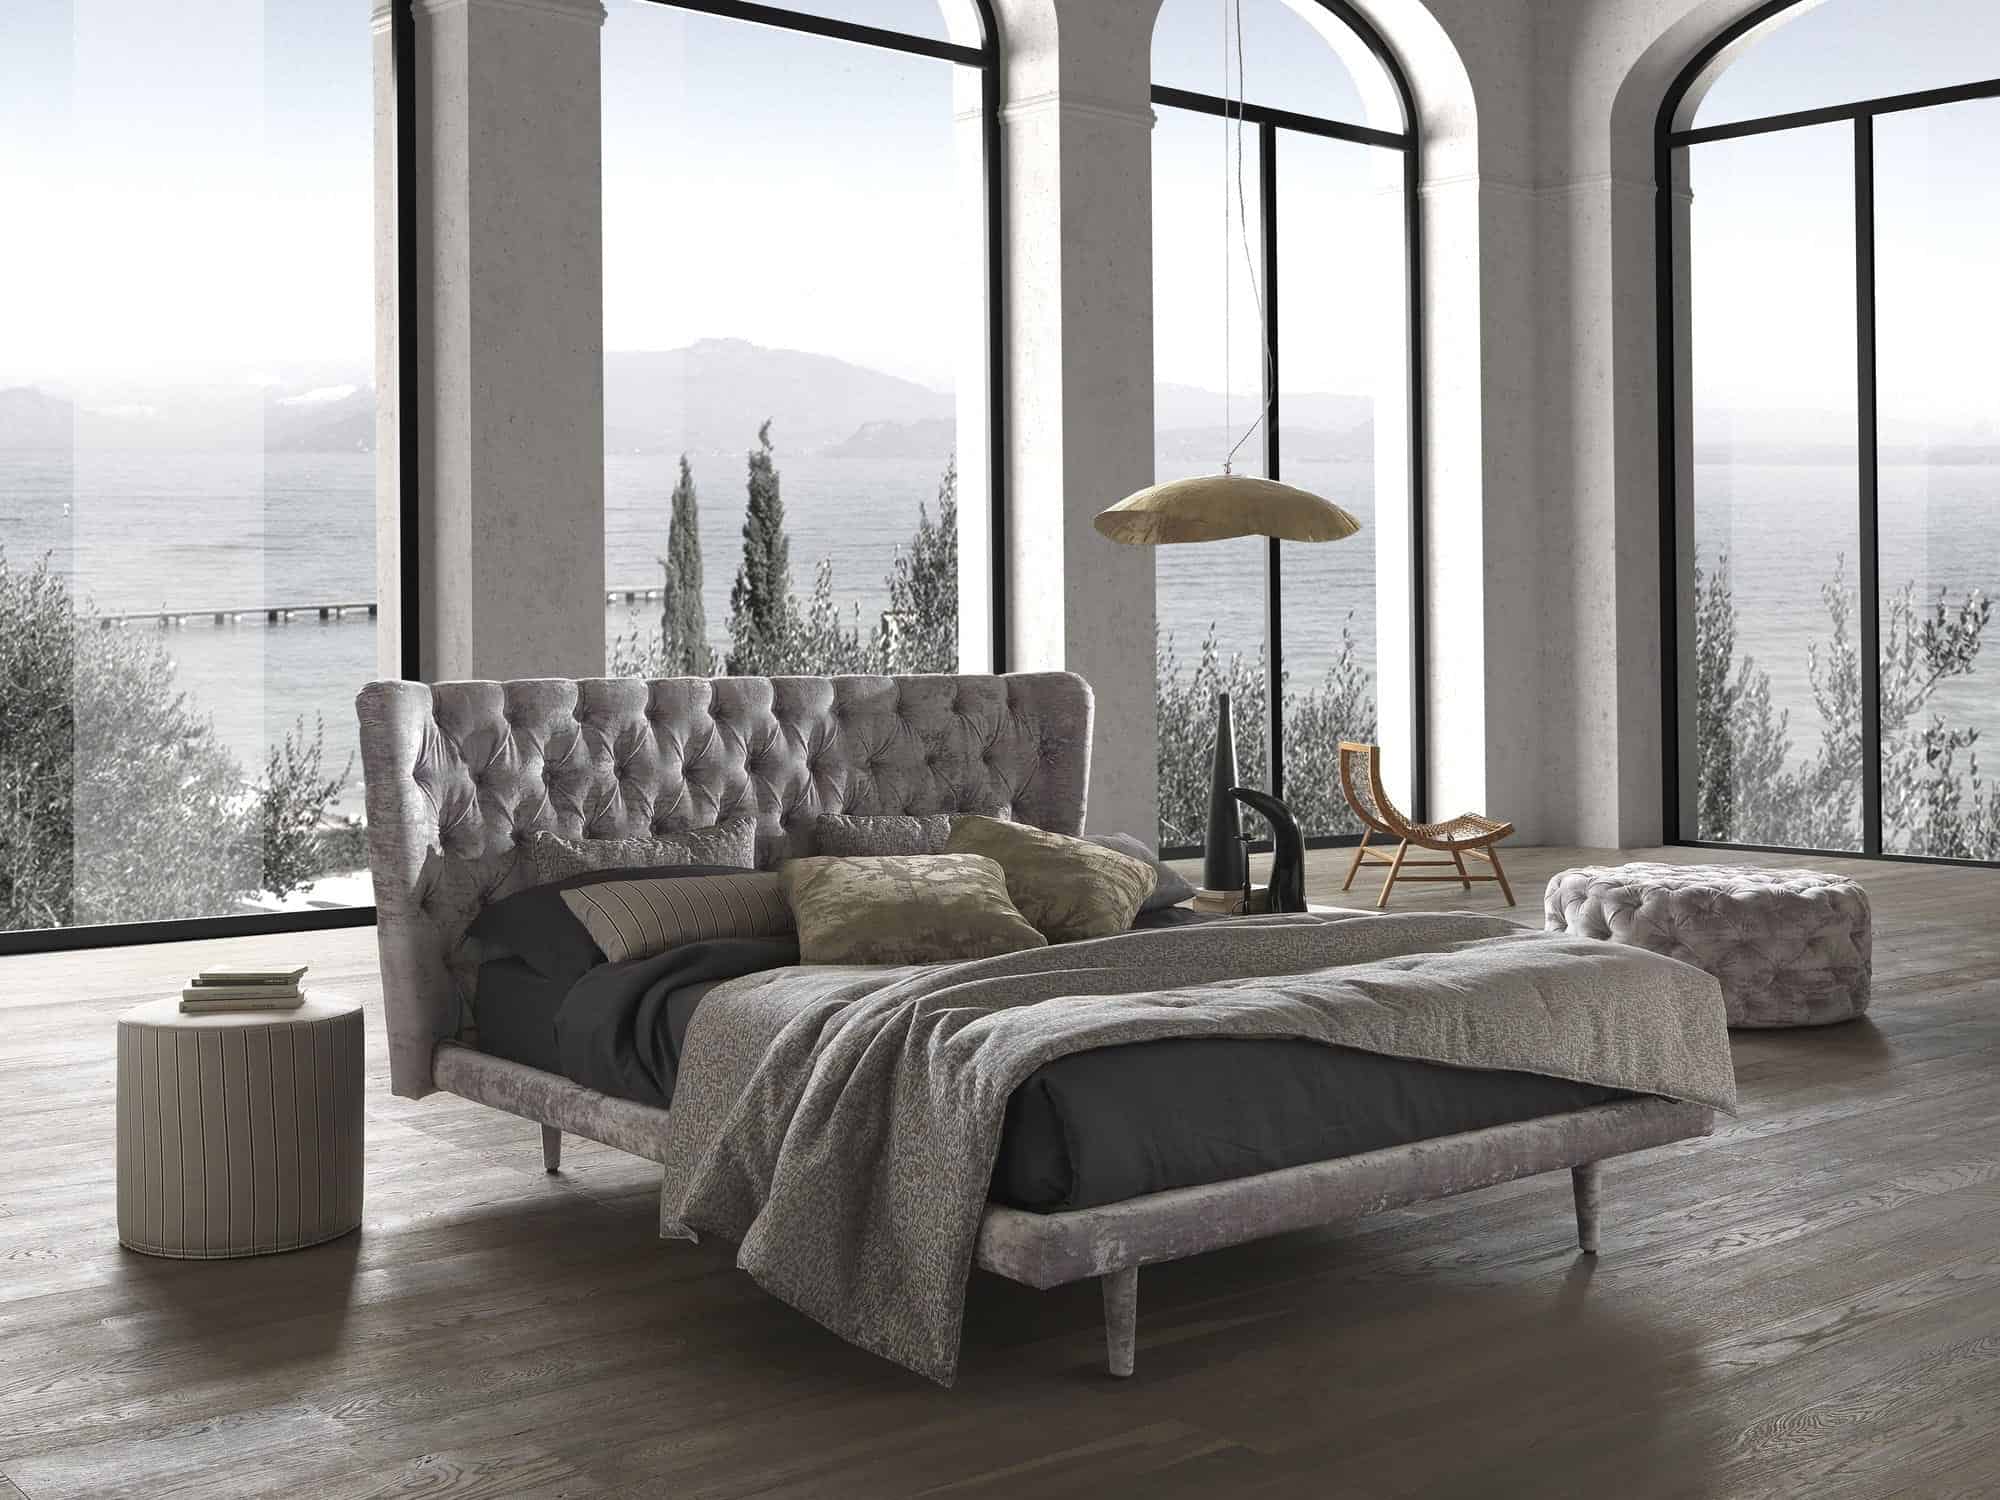 tufted-bedroom-with-a-view-bolzan-selene.jpg